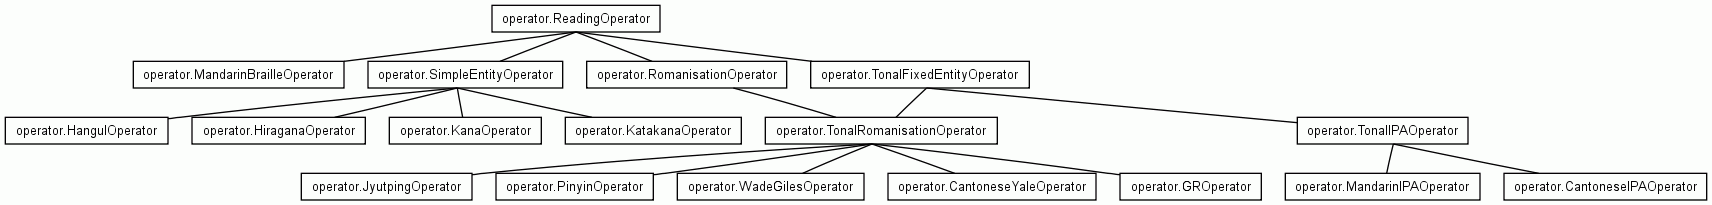 Class Hierarchy for operator.ReadingOperator